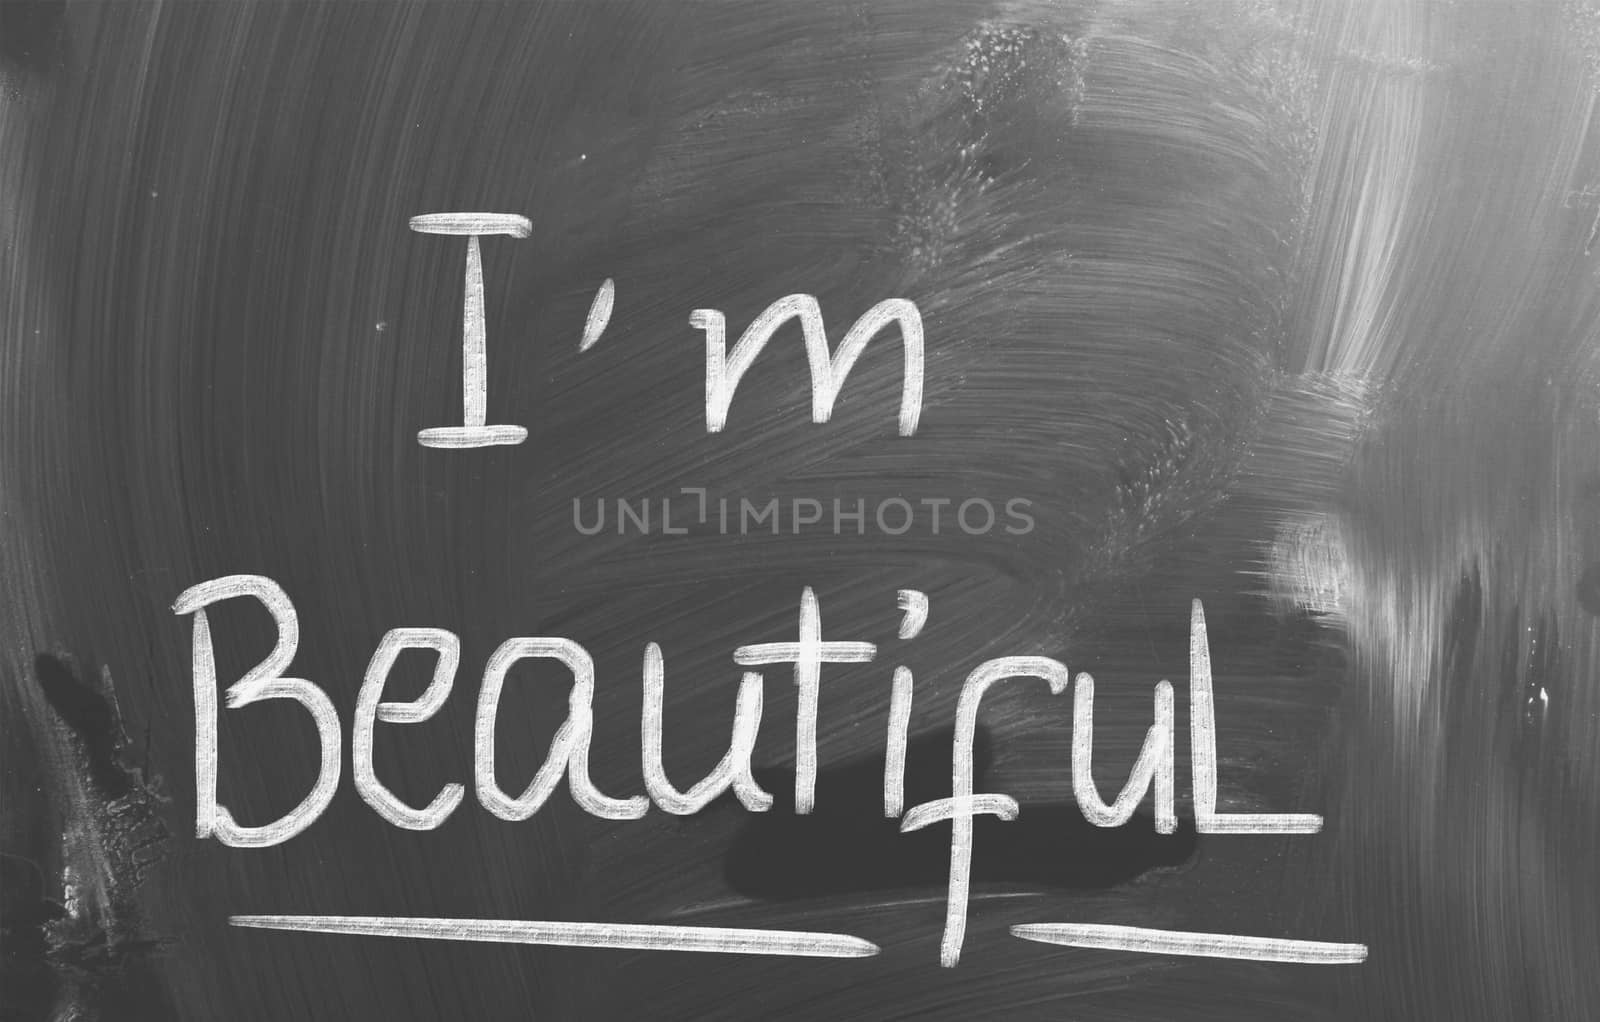 I Am Beautiful Concept